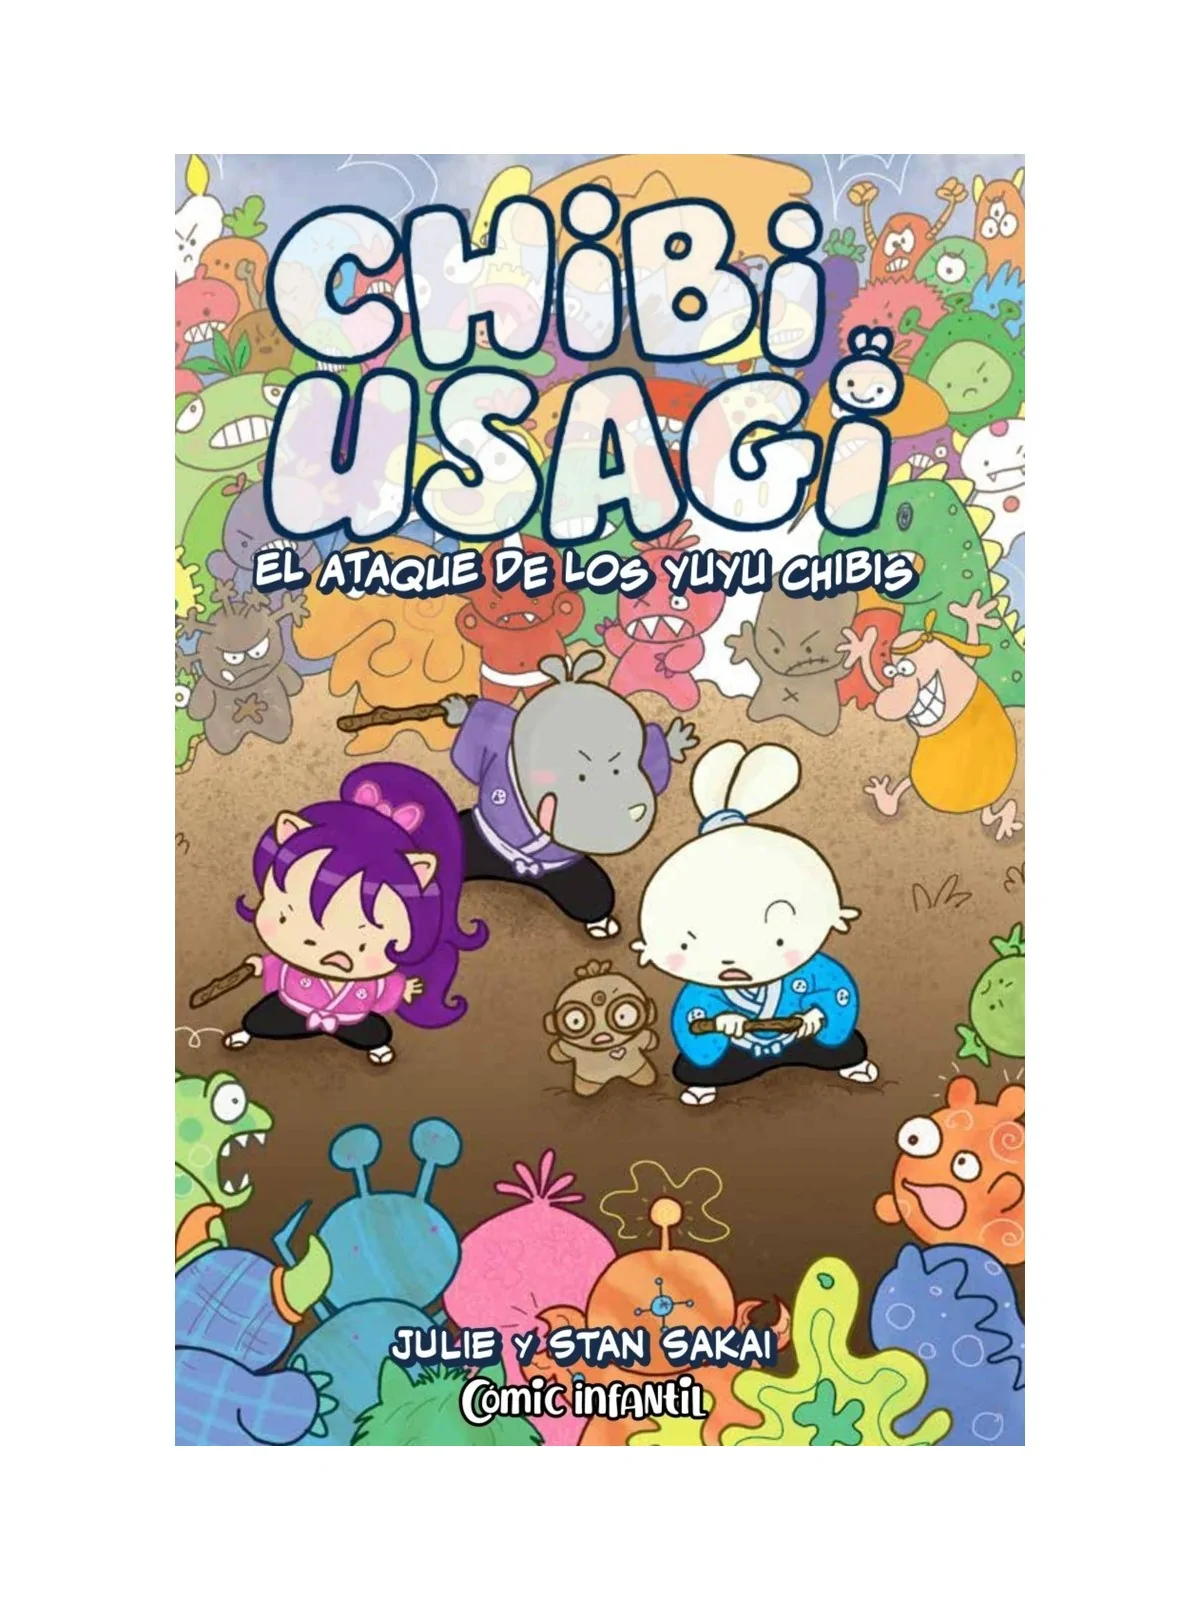 Comprar Chibi Usagi barato al mejor precio 12,30 € de PLANETA COMICS